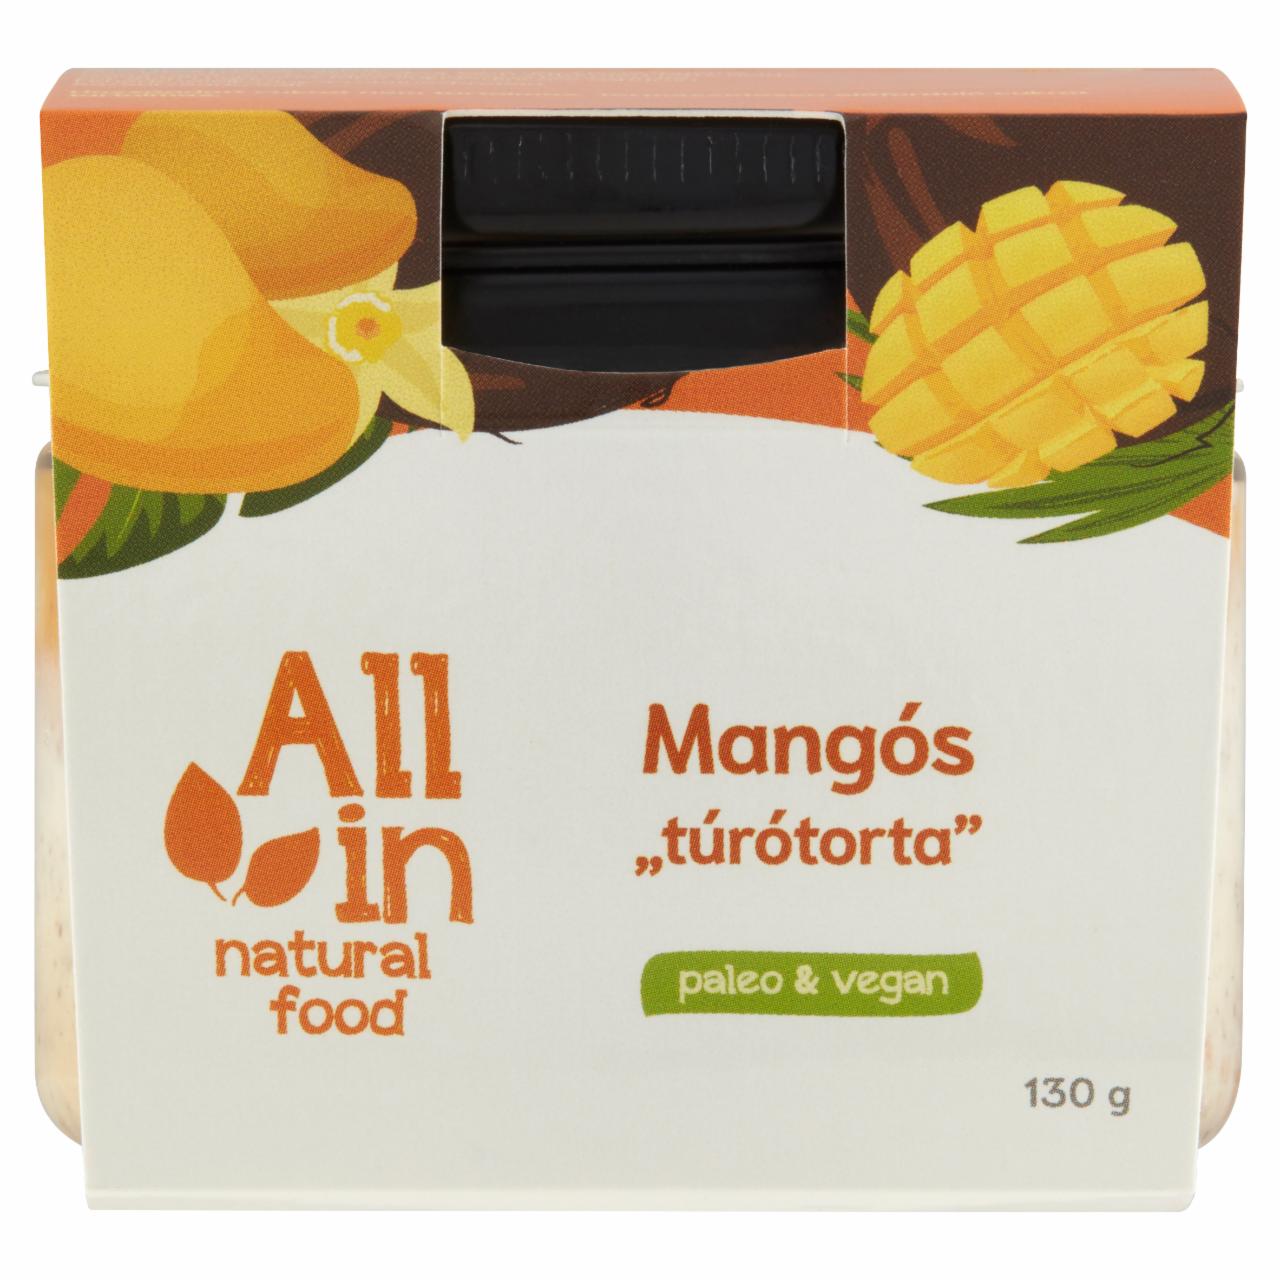 Képek - ALL IN natural food paleo & vegan mangós „túrótorta' 130 g